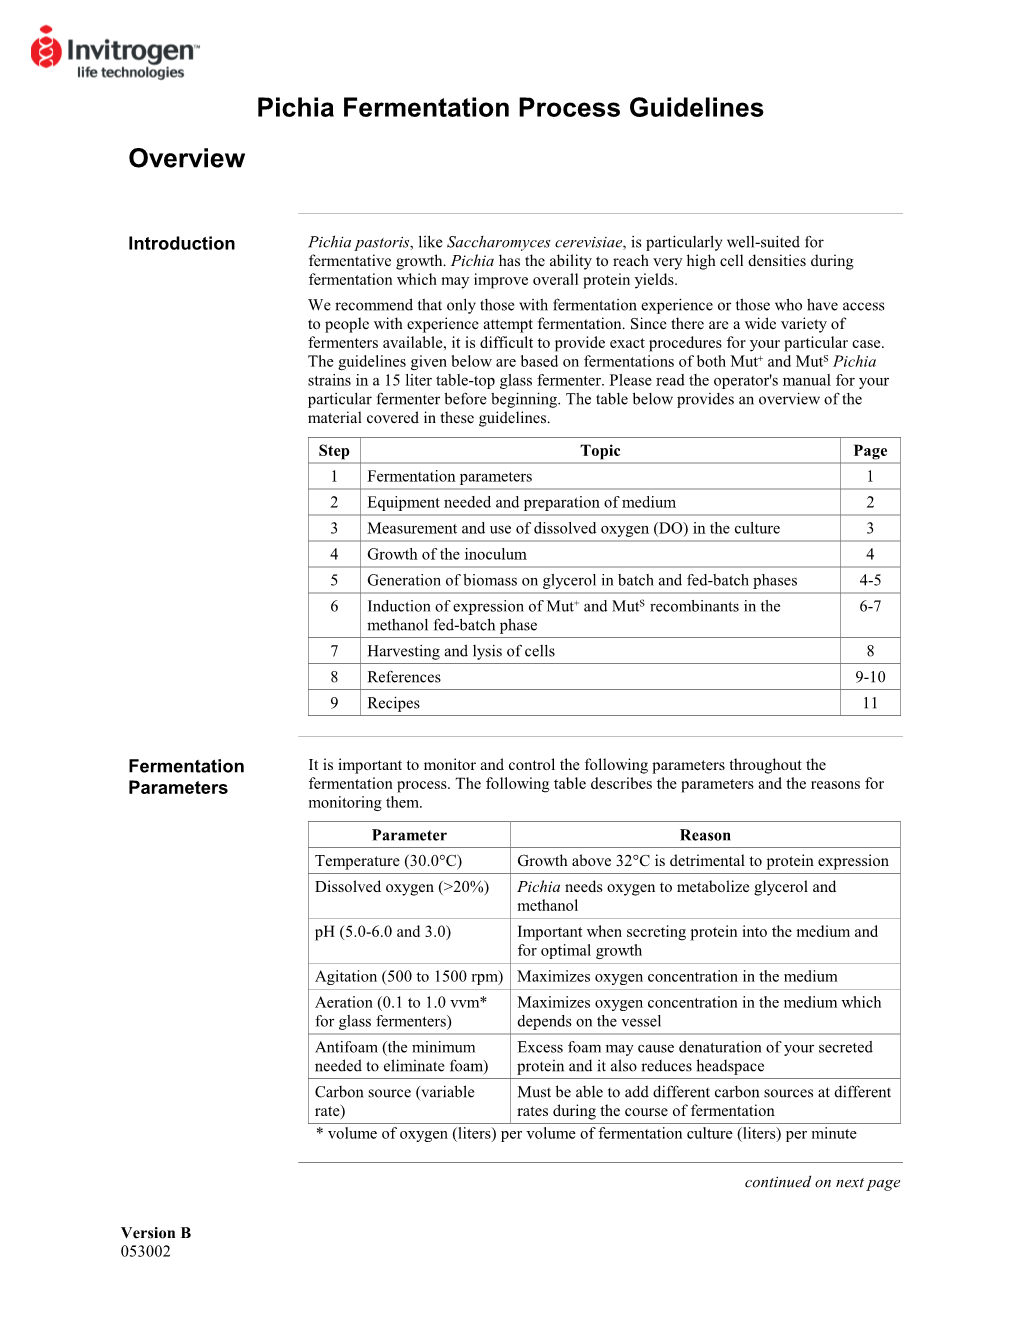 Pichia Fermentation Process Guidelines Overview